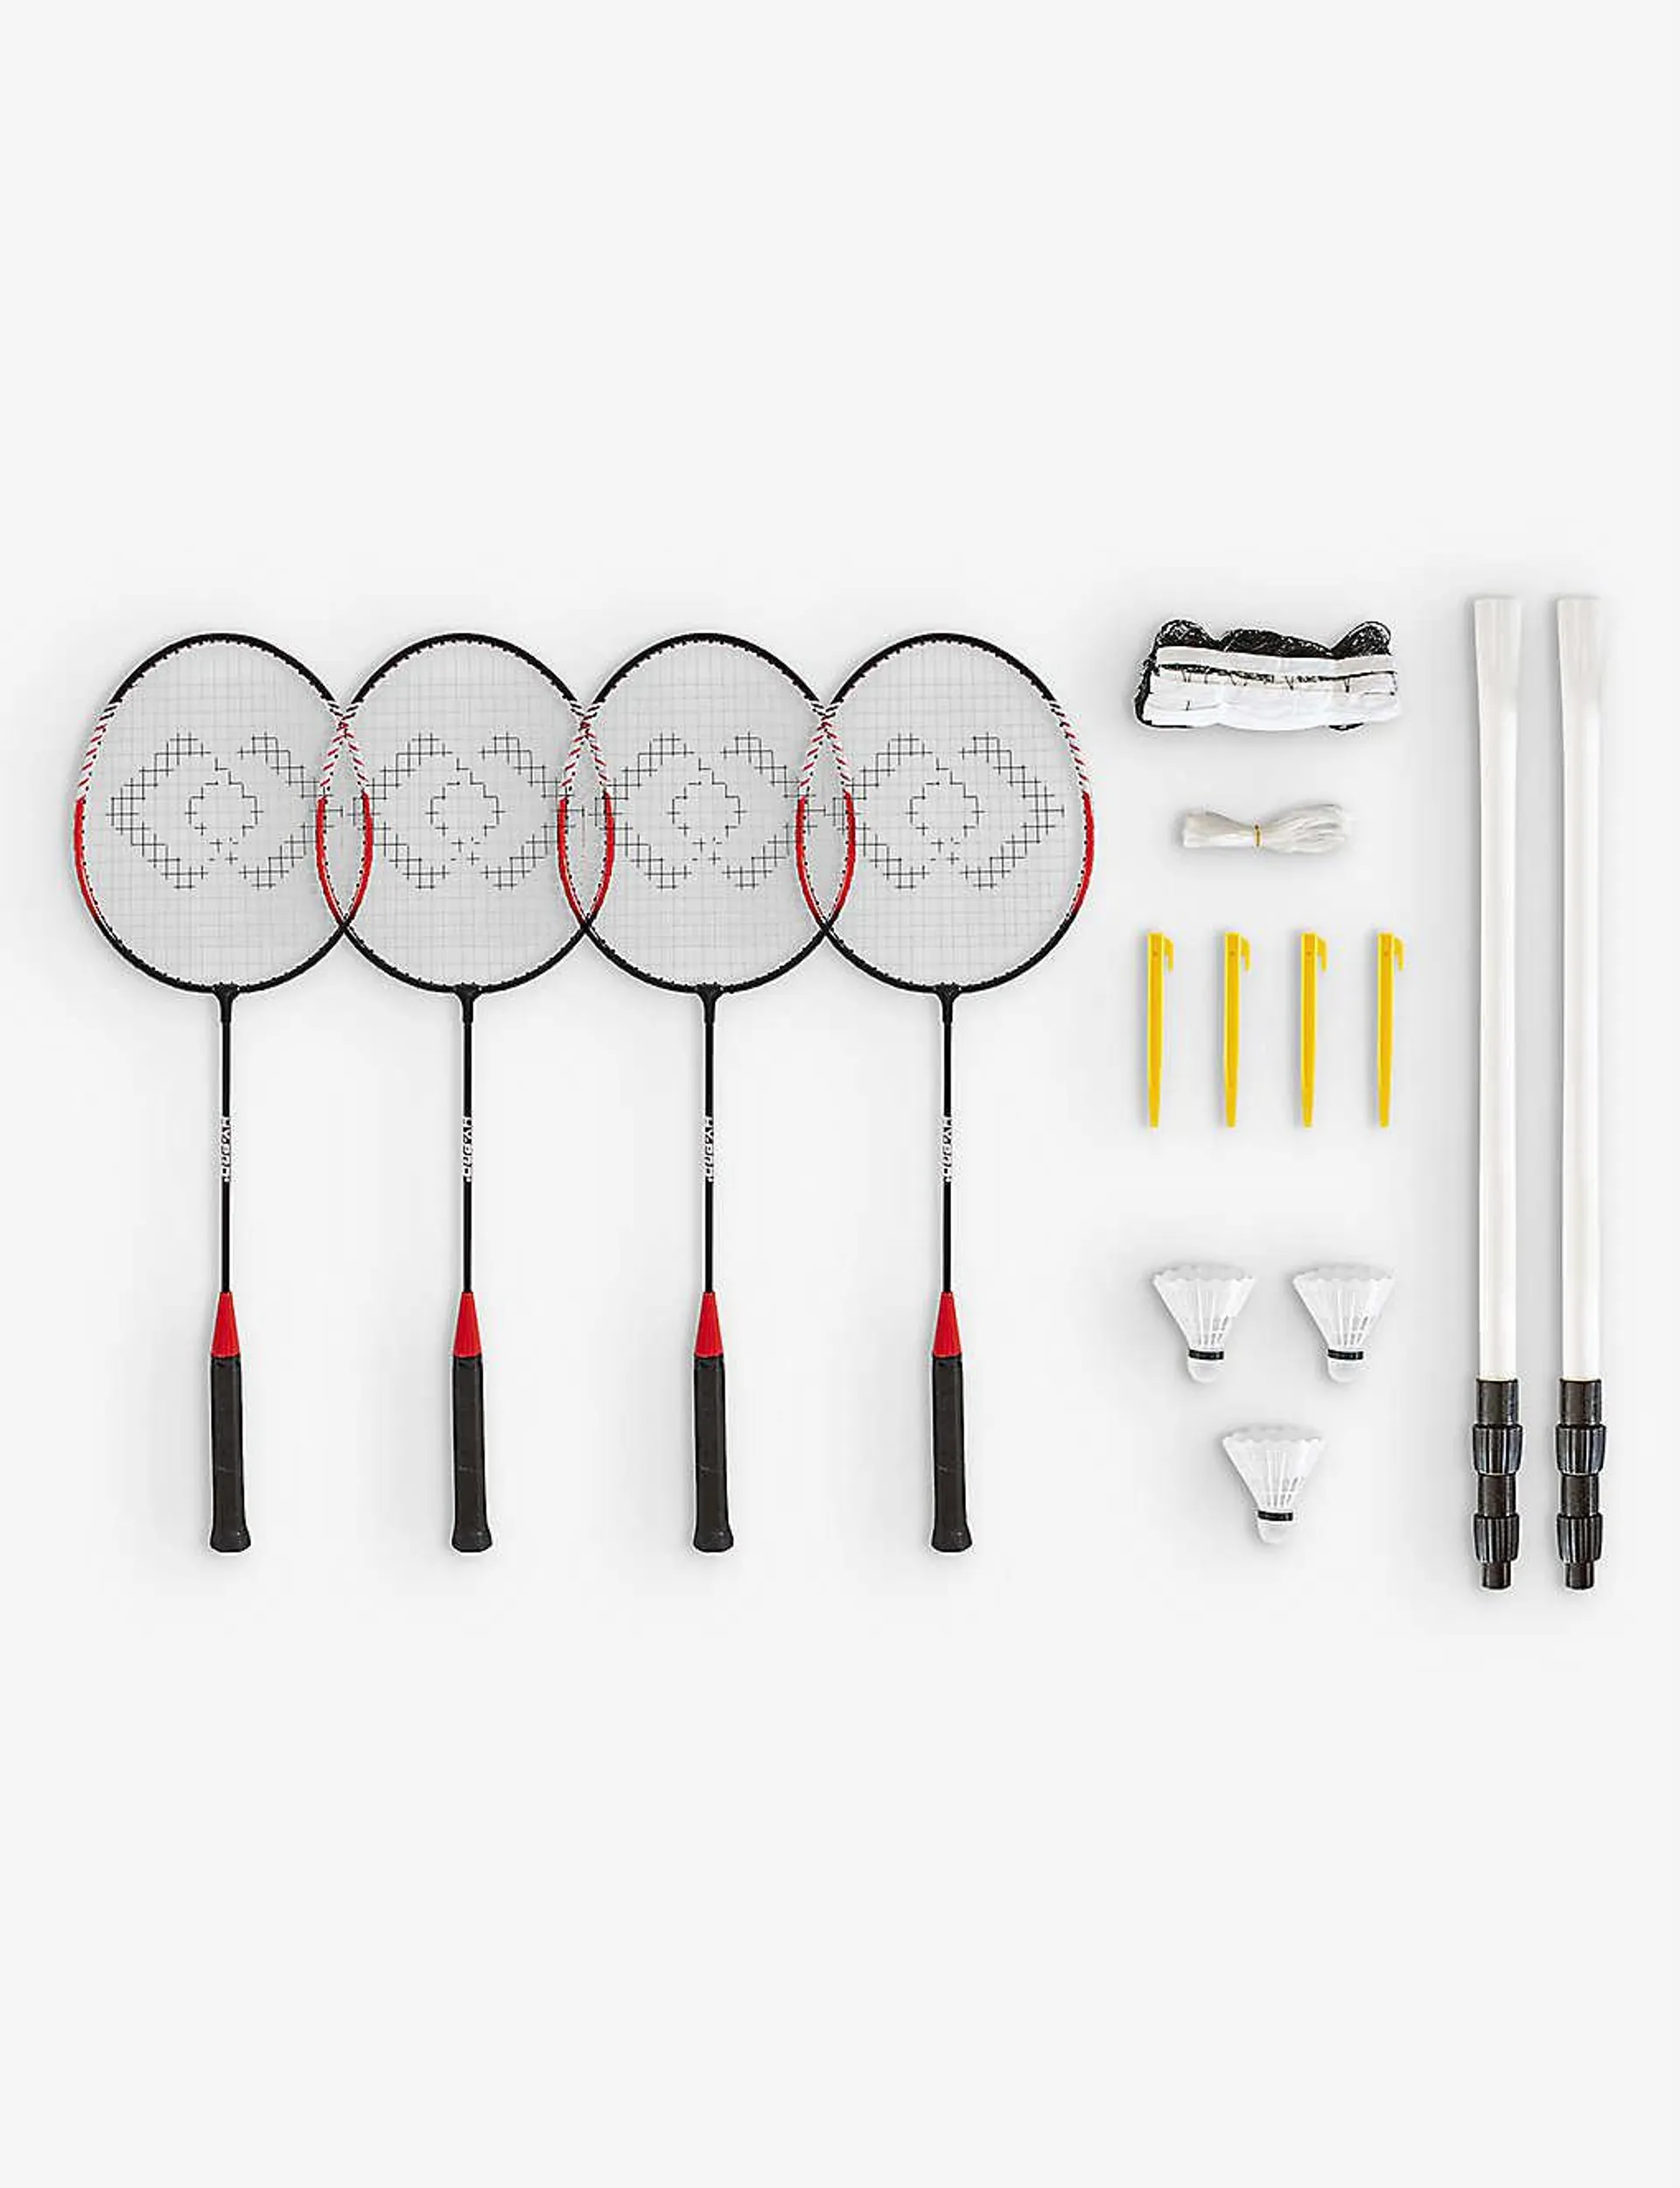 Four-person badminton set